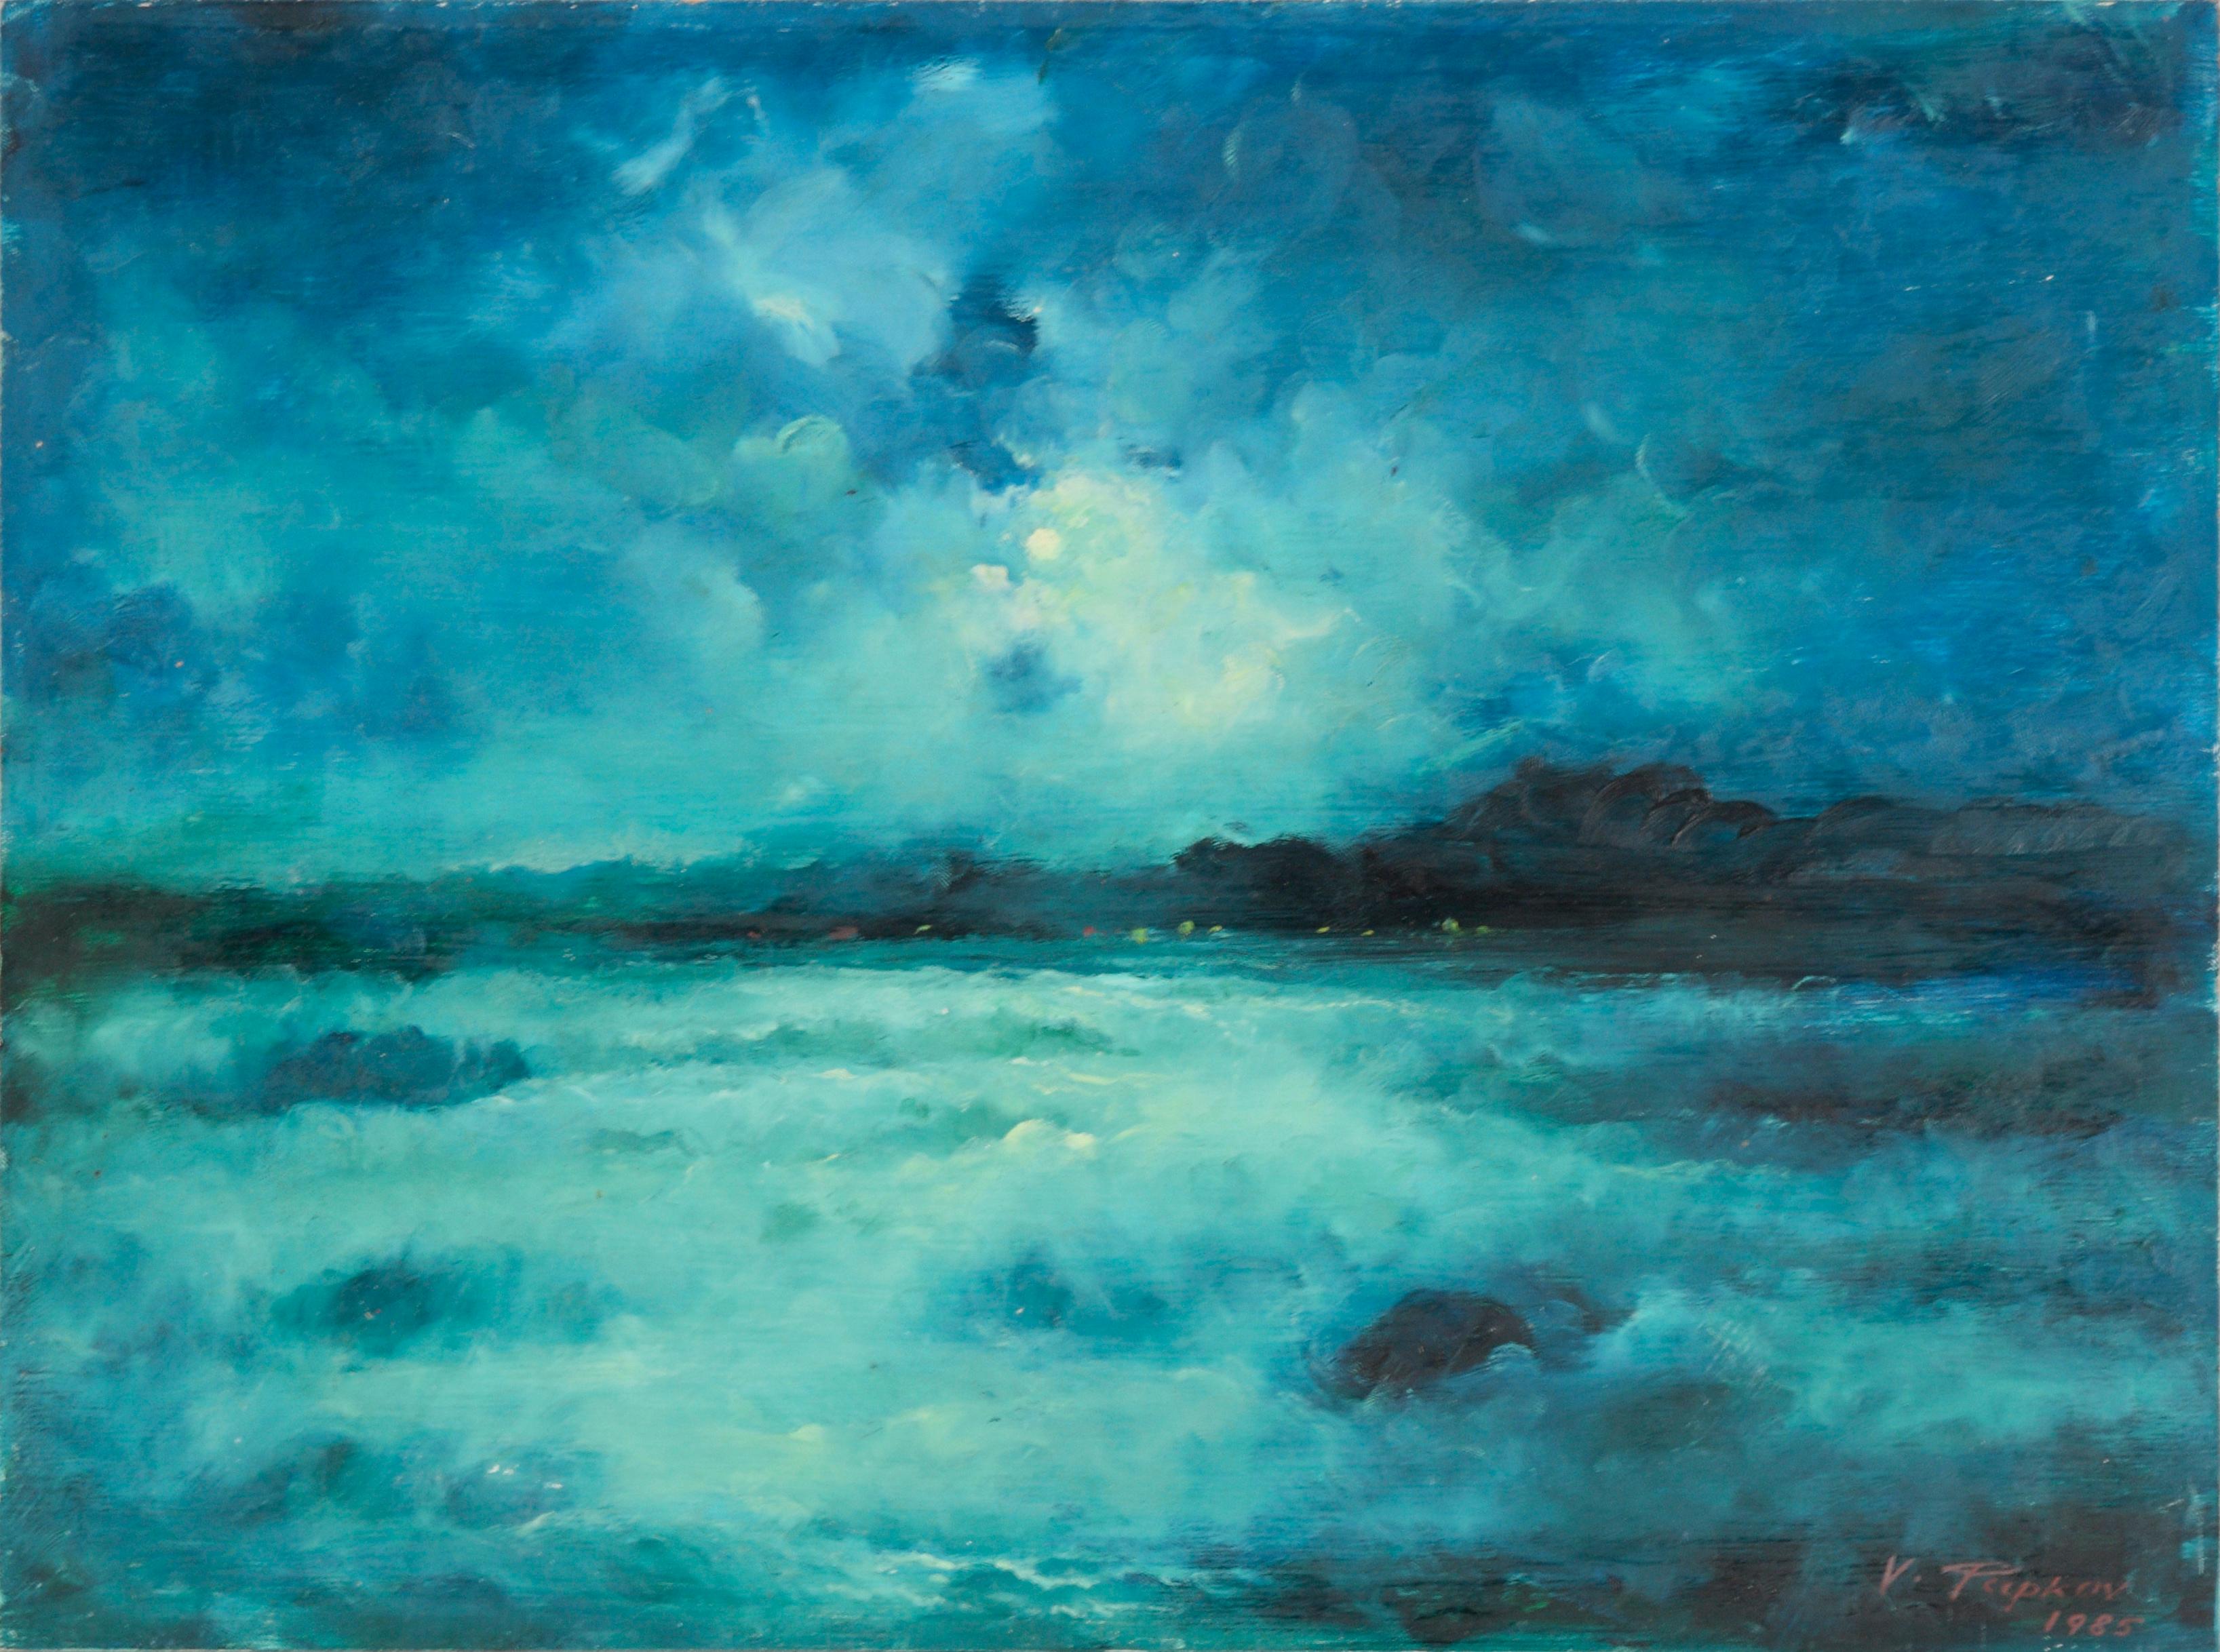 Vasil Papkov Landscape Painting - Moon Over the Ocean - Seascape